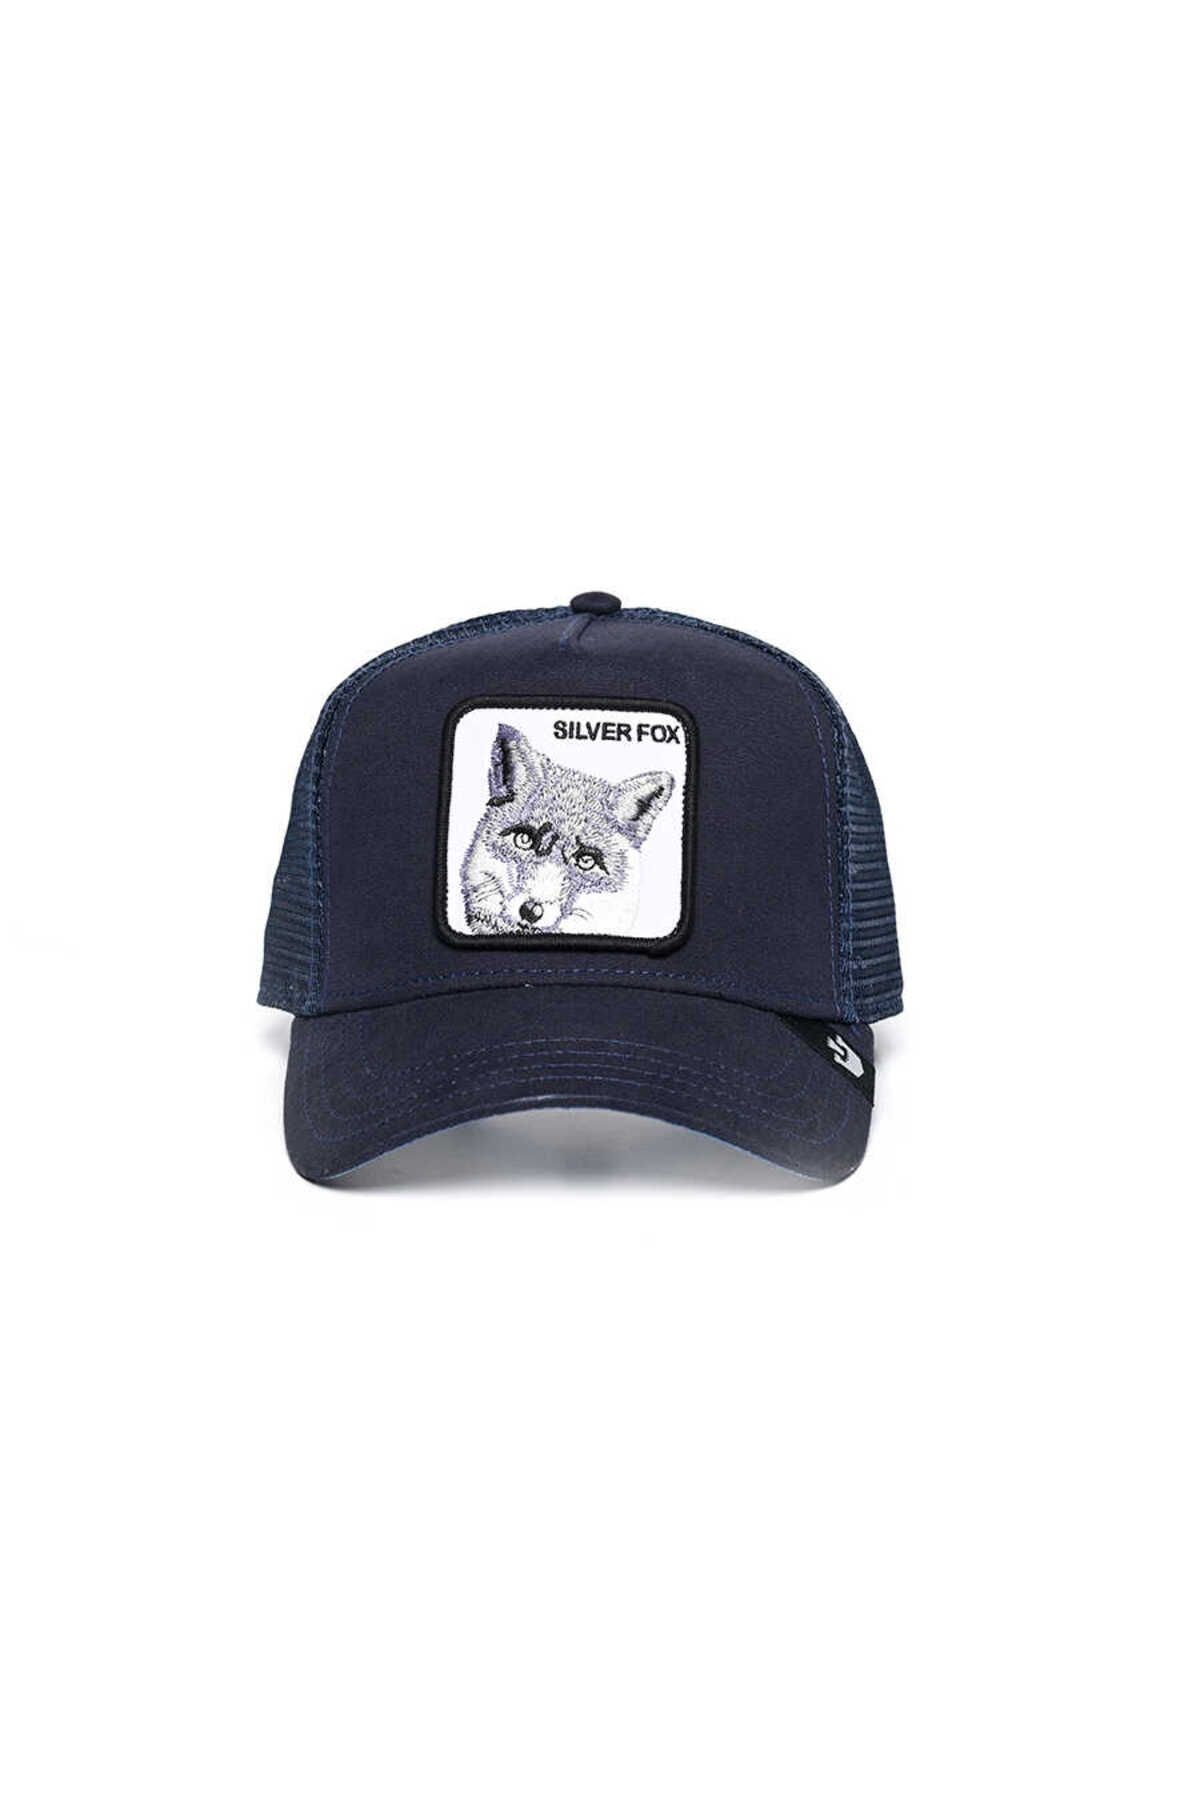 Goorin Bros Silver Fox Şapka 101-0390 Gri Standart